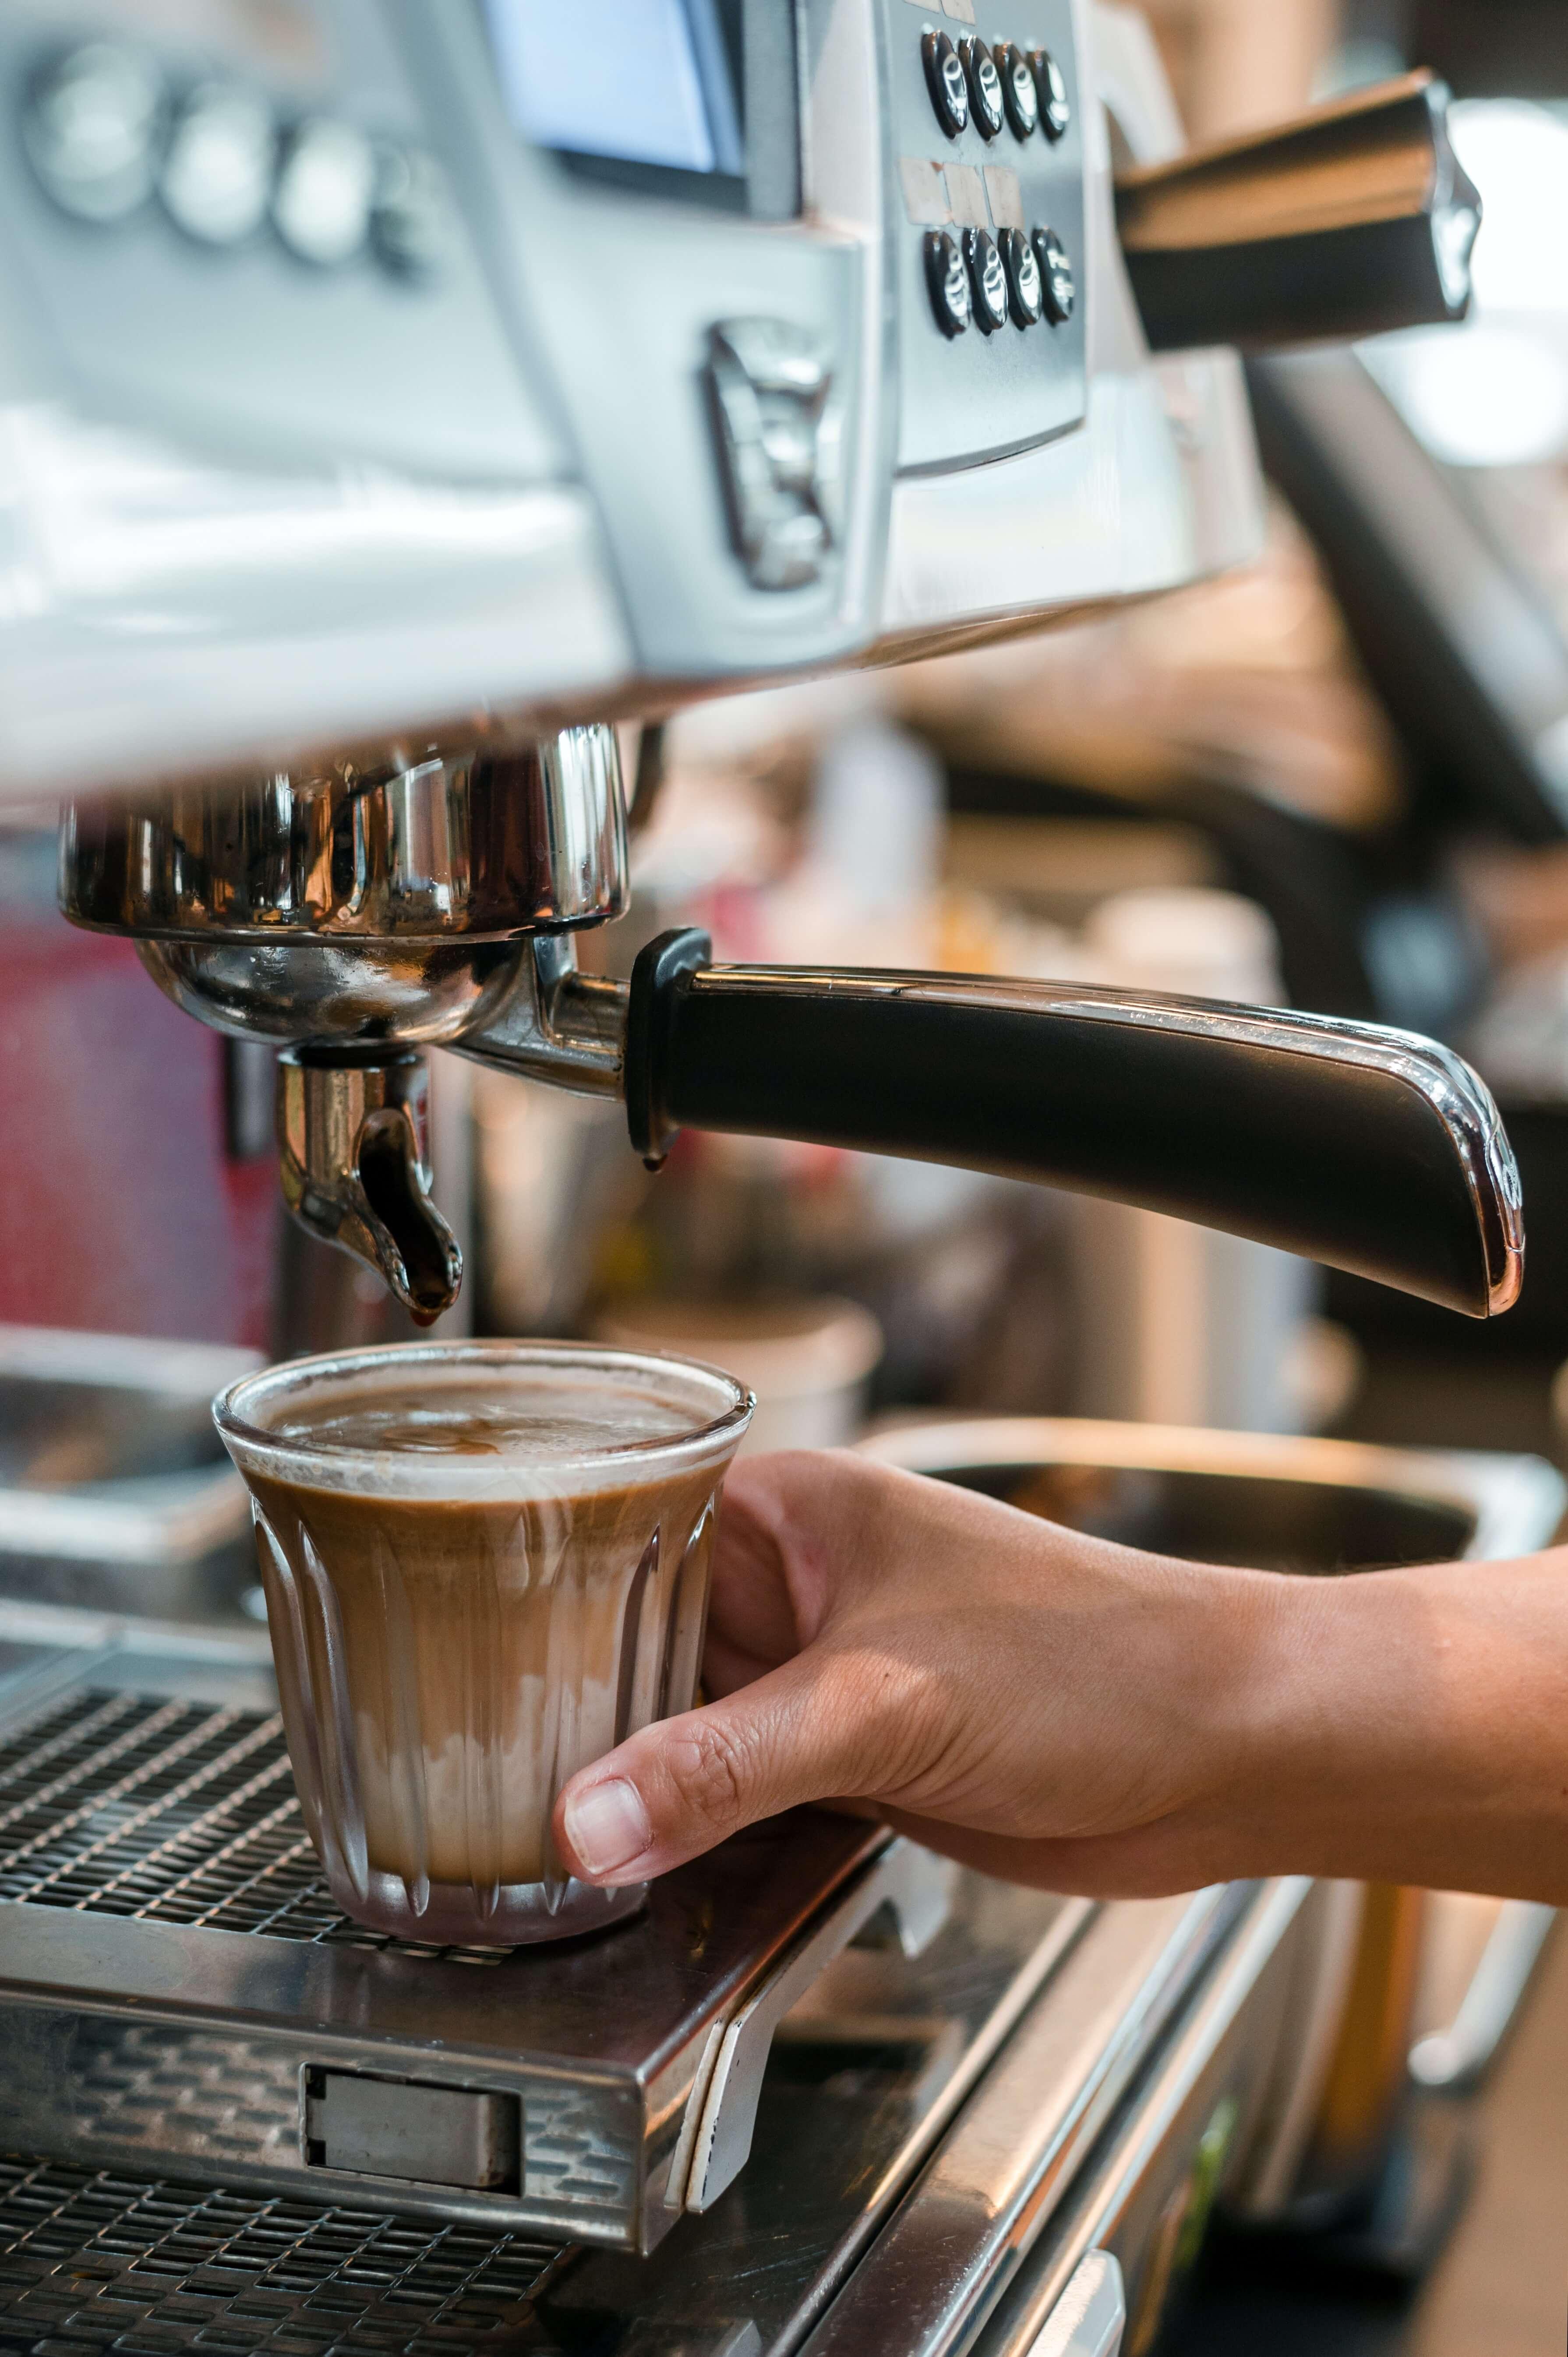 A person operating an espresso machine to brew coffee.